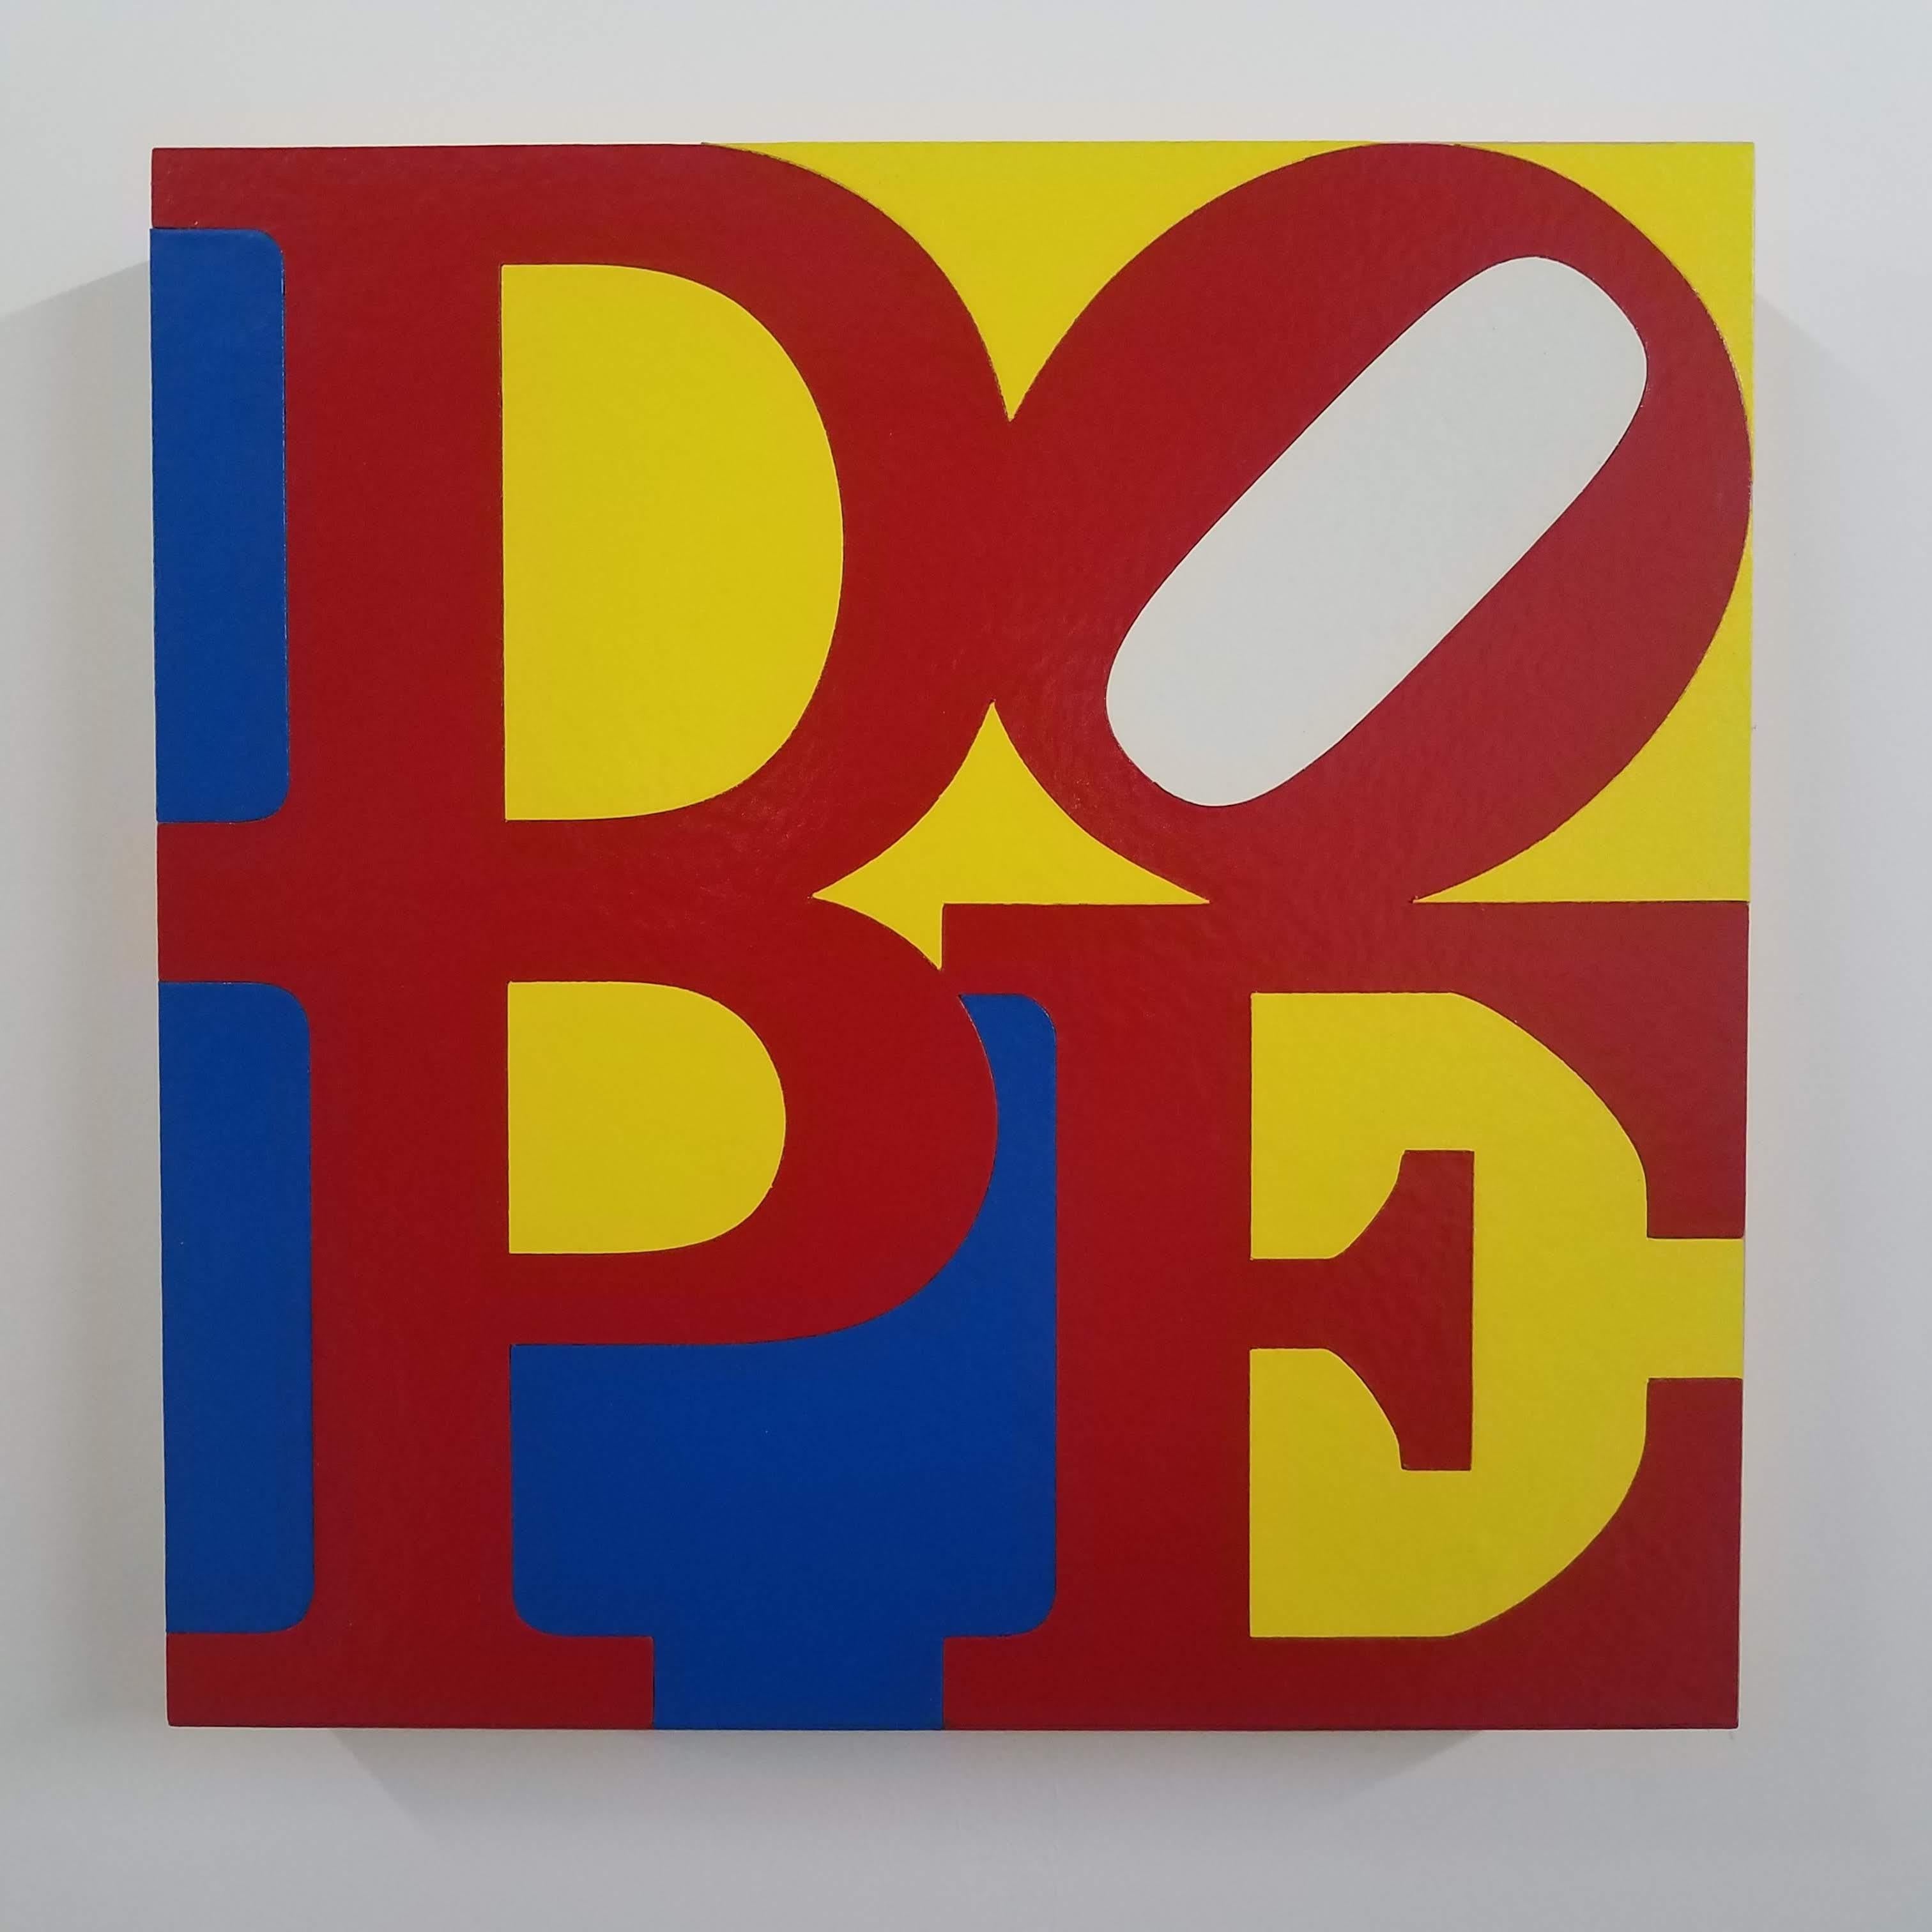 Colorado (Amendment 64), Dope in Blue, Yellow, Red and White on panel - Mixed Media Art by Joseph Juju Bottari